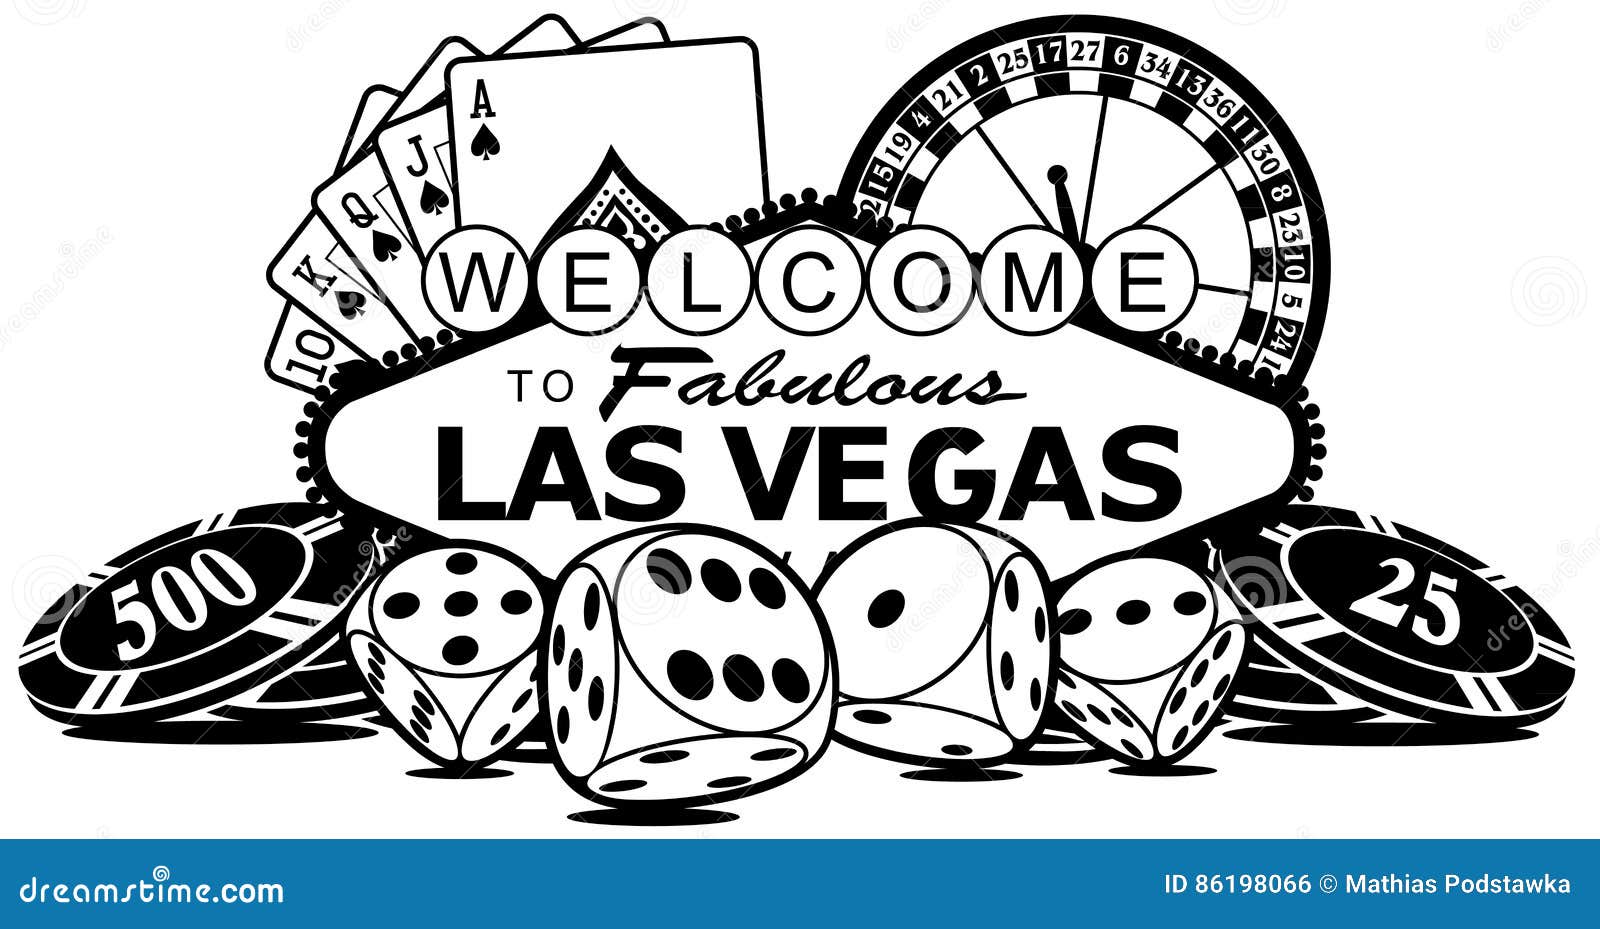 Las Vegas Casino Stock Vector Illustration and Royalty Free Las Vegas  Casino Clipart